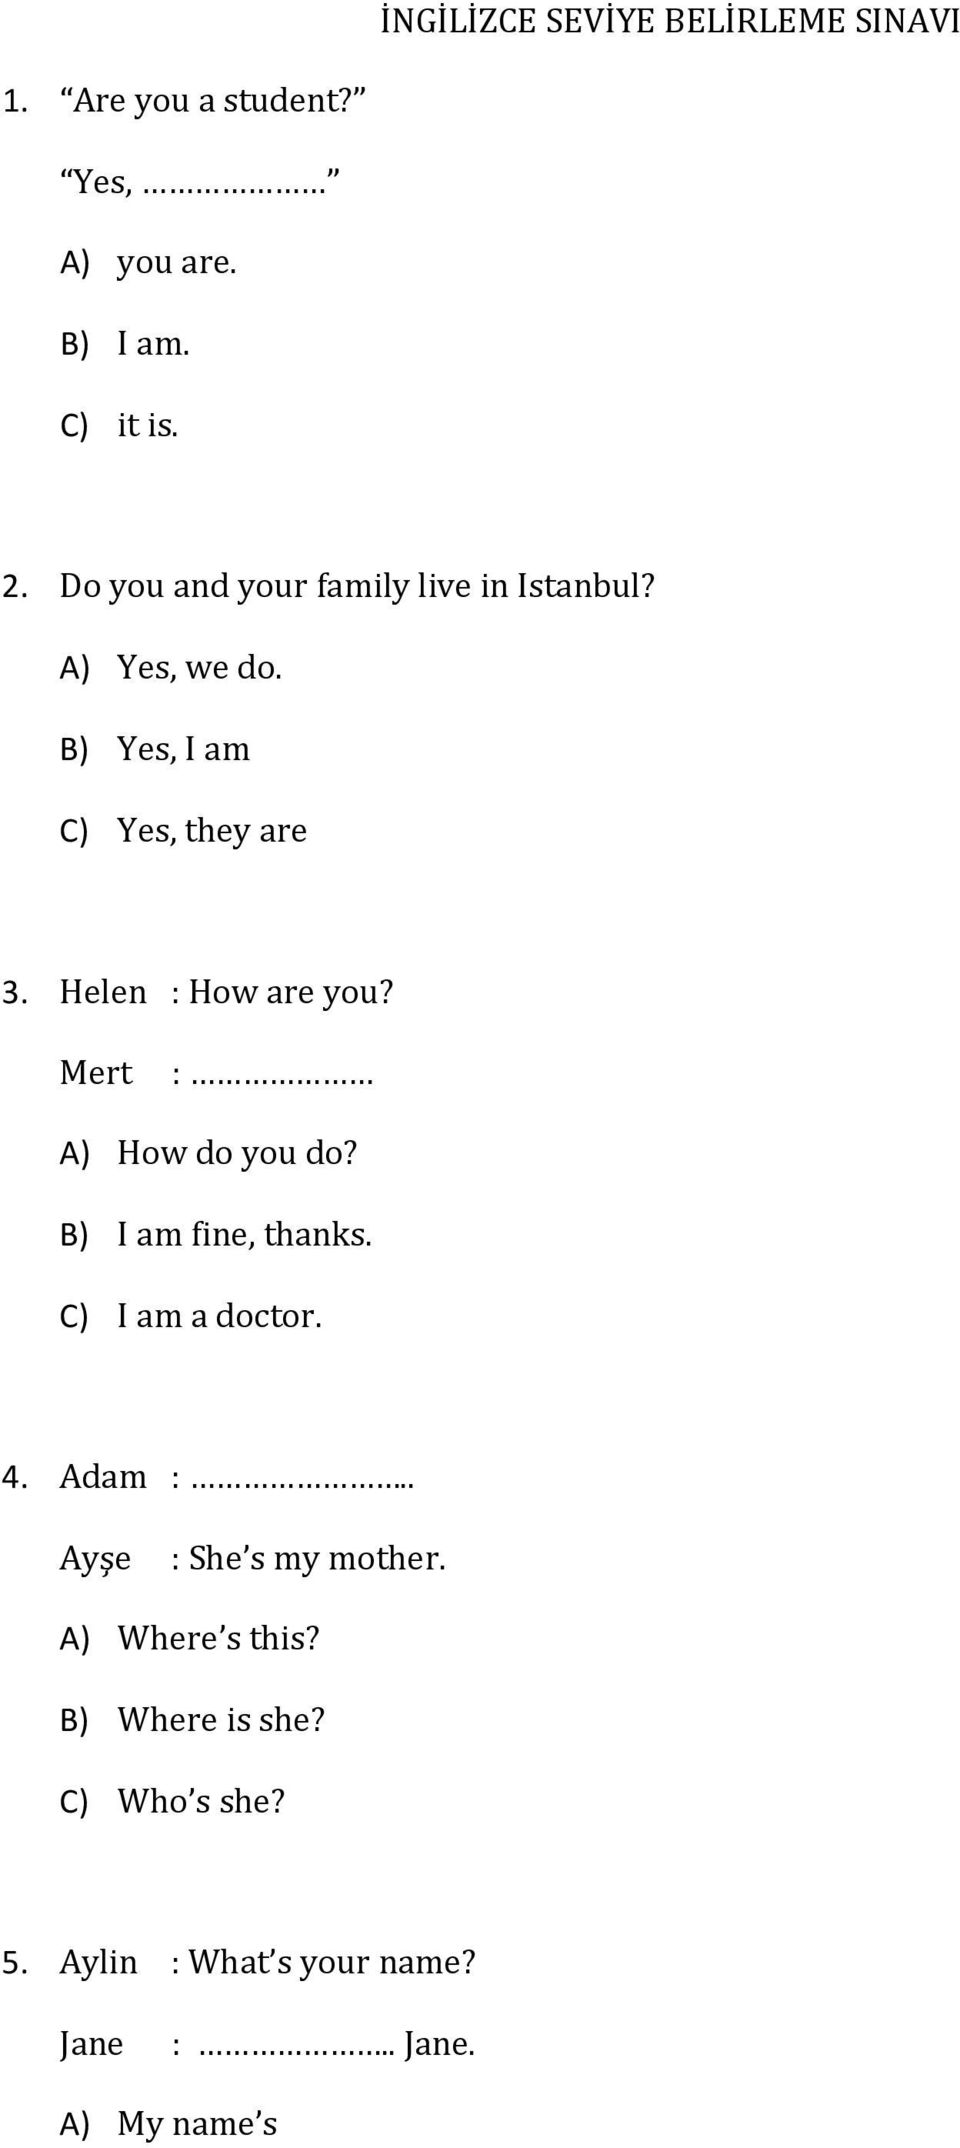 Helen : How are you? Mert : A) How do you do? B) I am fine, thanks. C) I am a doctor. 4. Adam :.